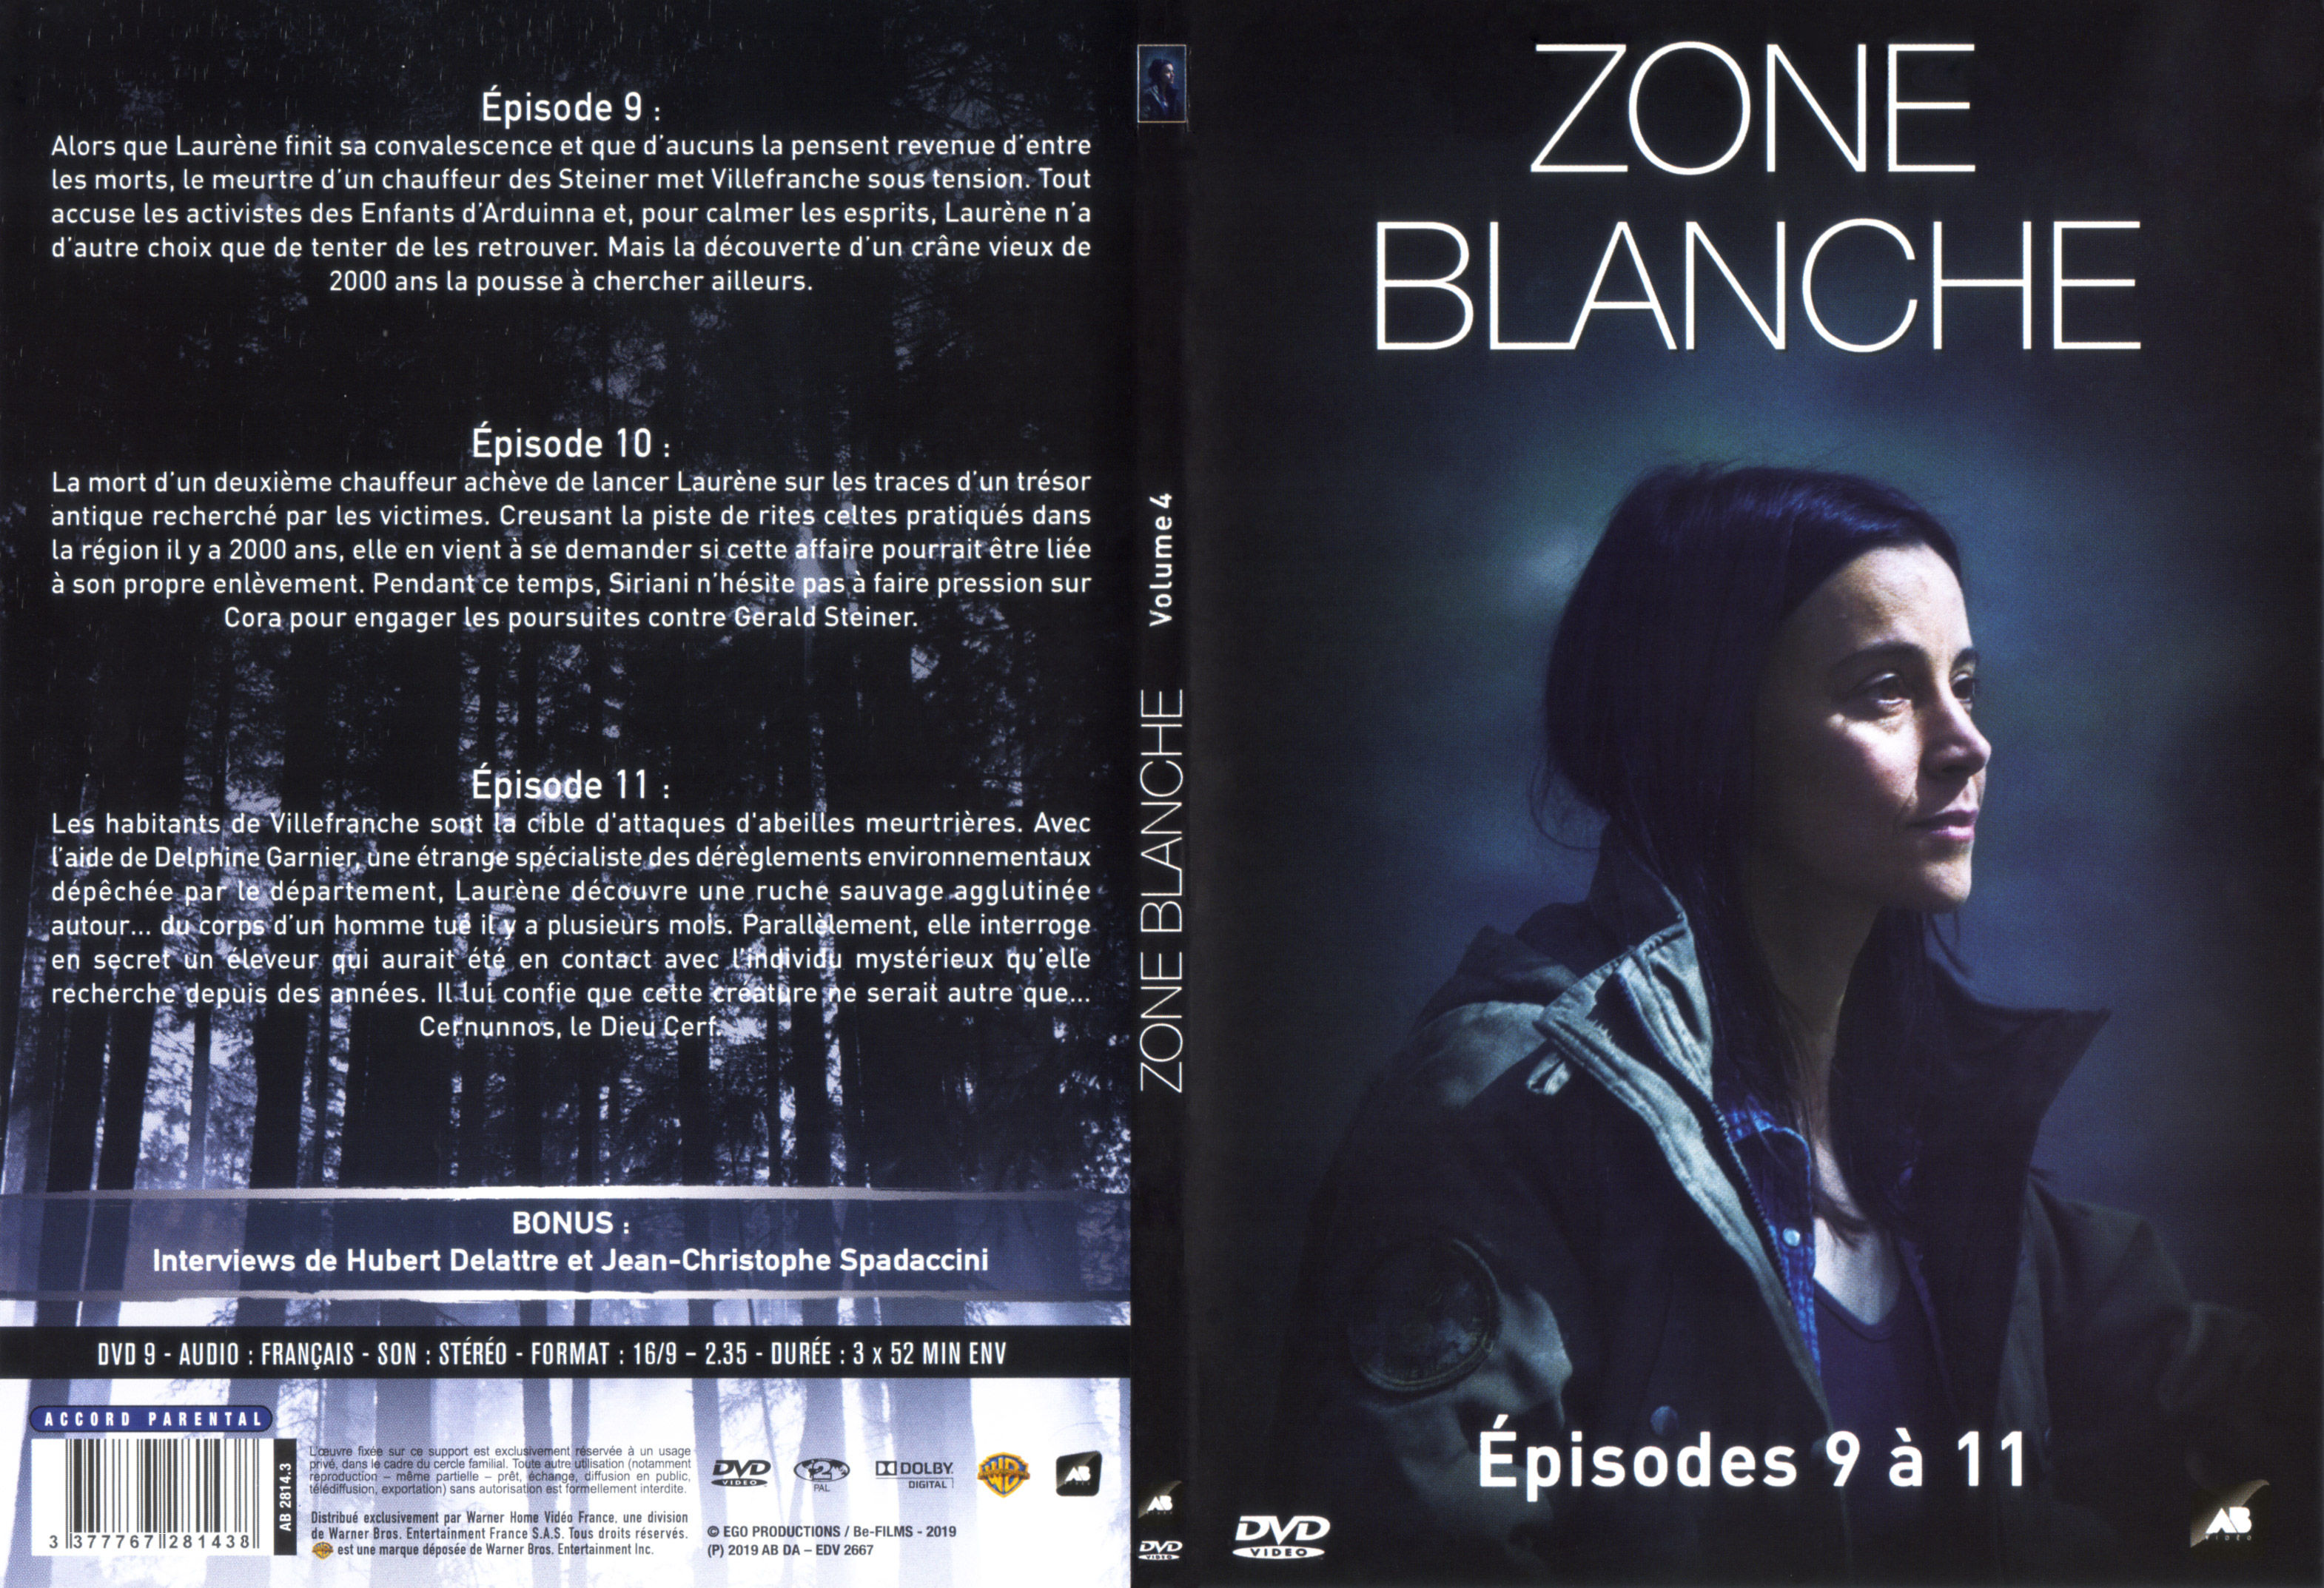 Jaquette DVD Zone blanche pisode 9-10-11